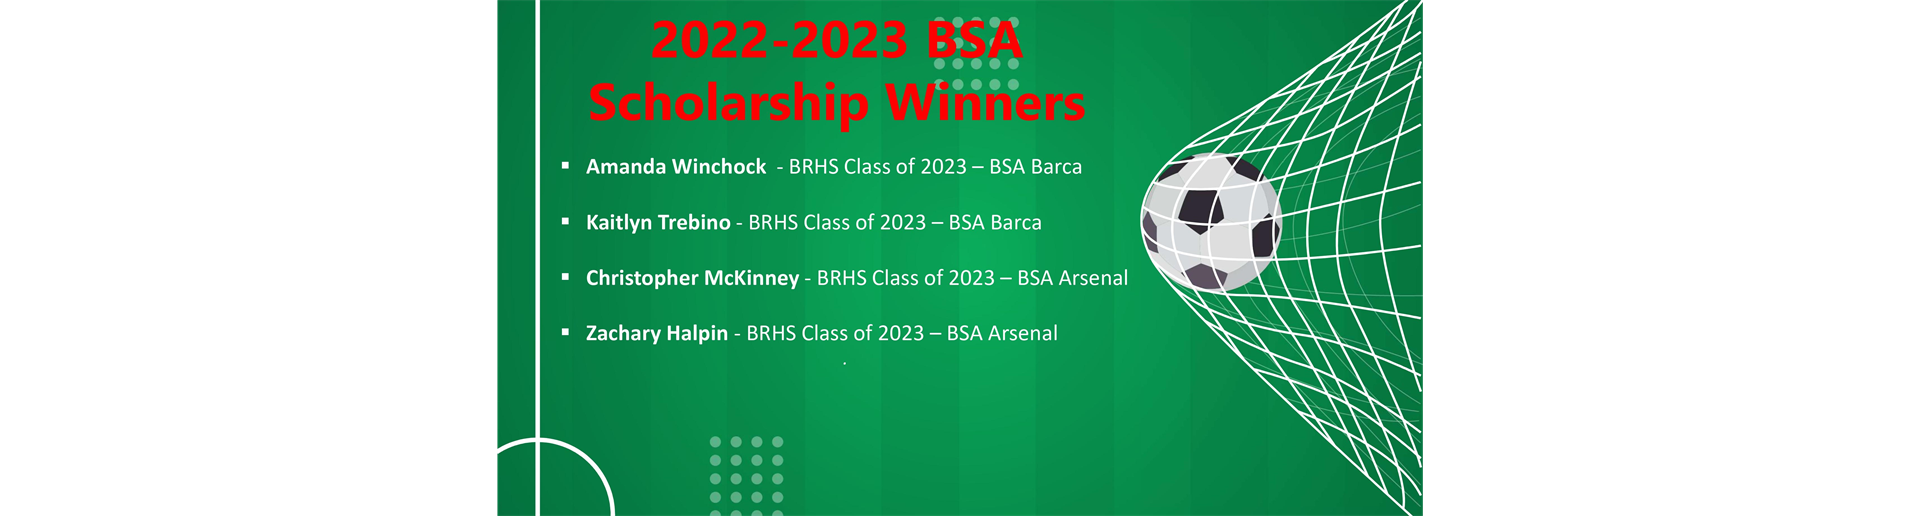 BSA Scholarship Winners 2022-2023